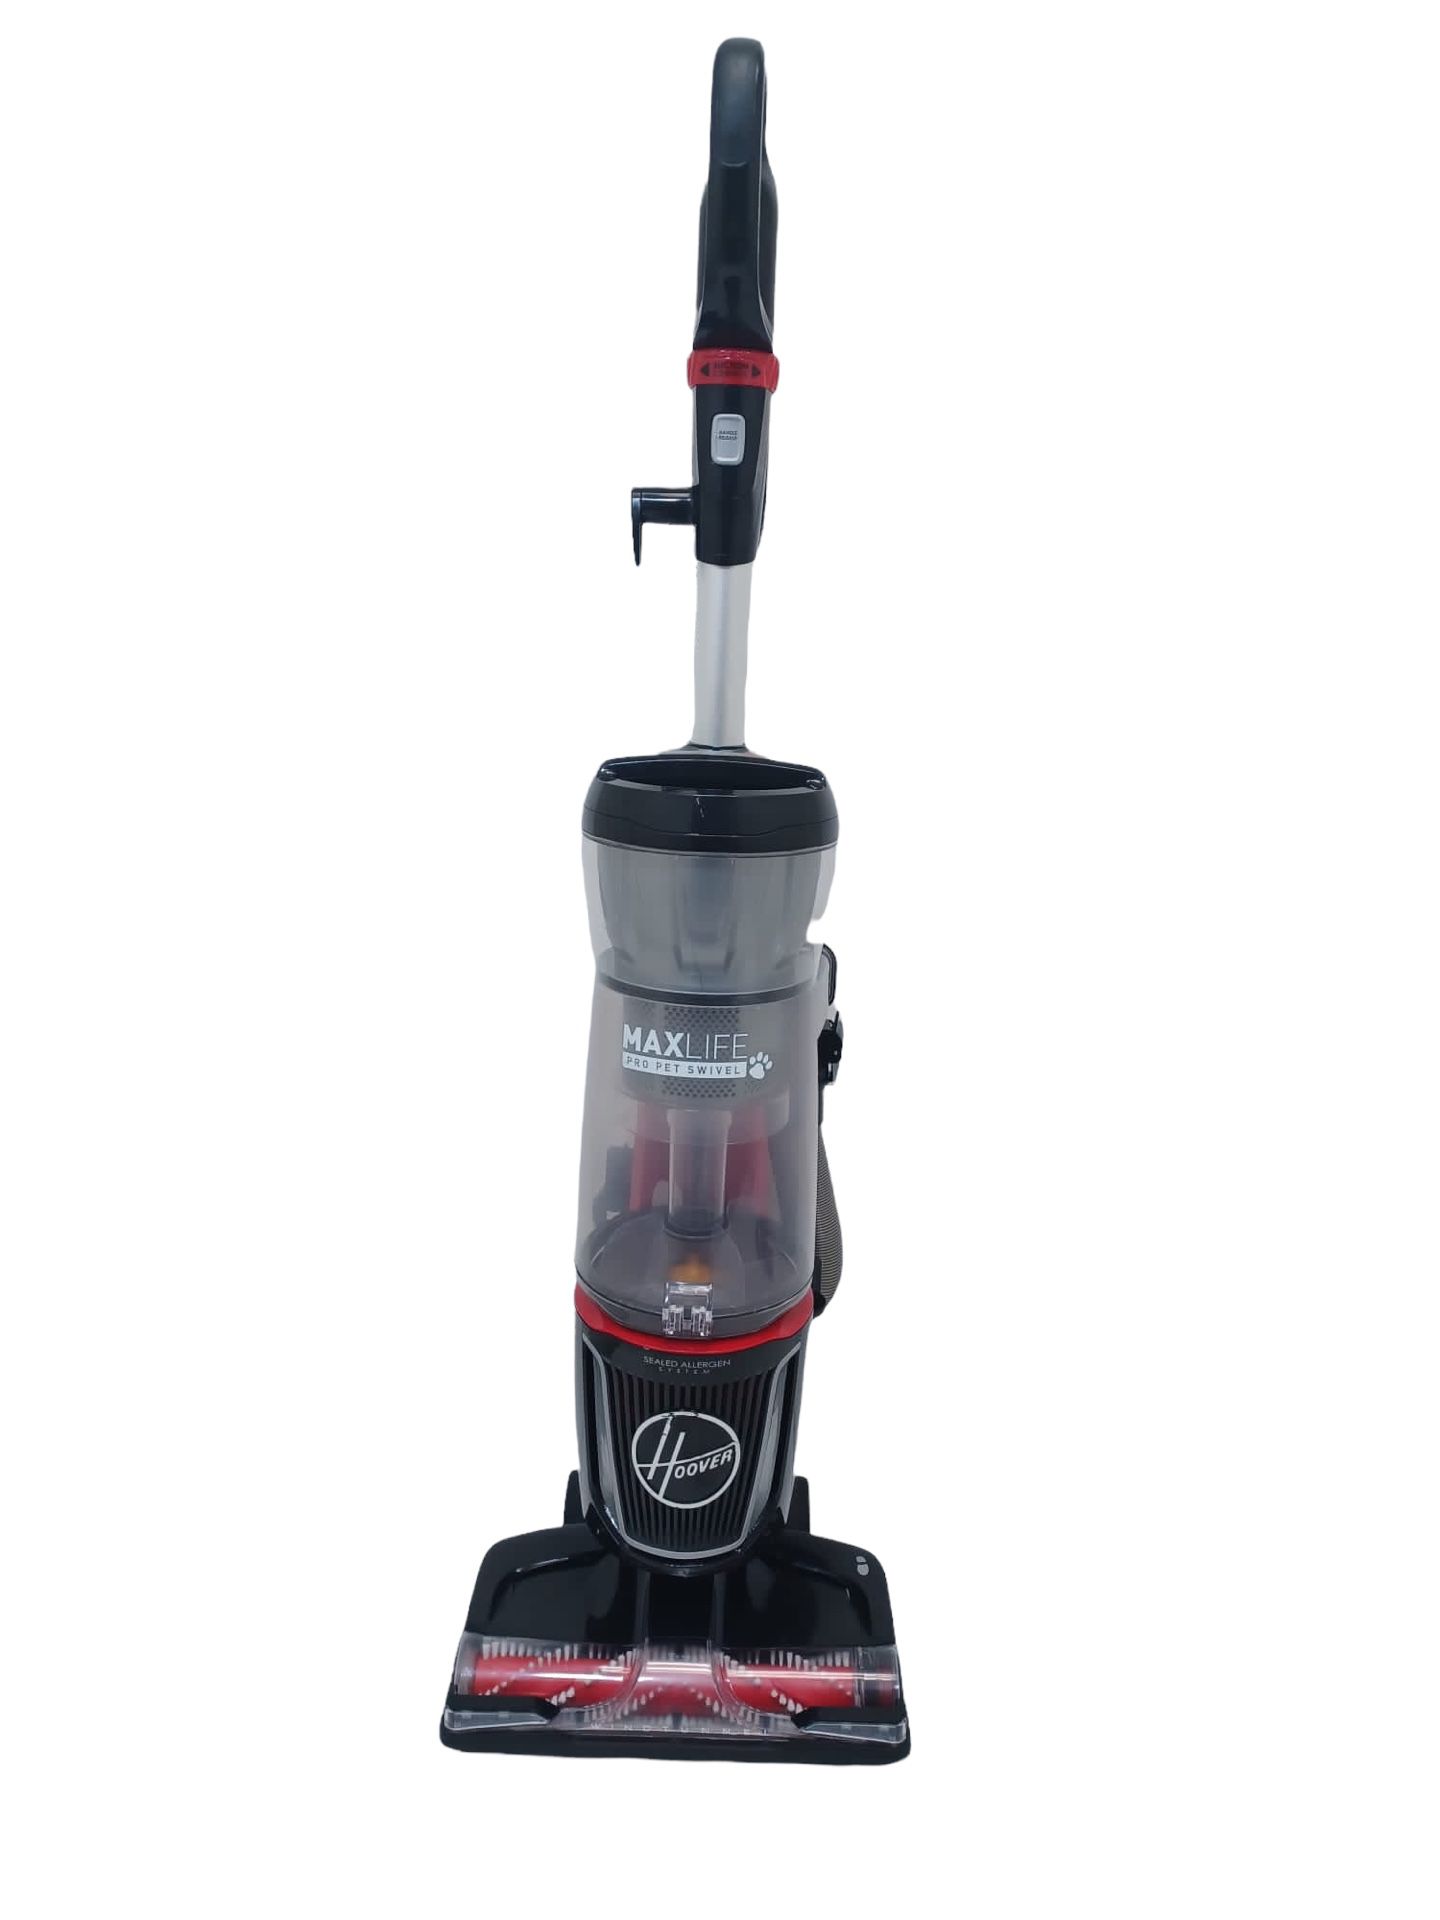 Hoover Maxlife Proper Swivel Bagless Upright Vacuum Cleaner (7550)